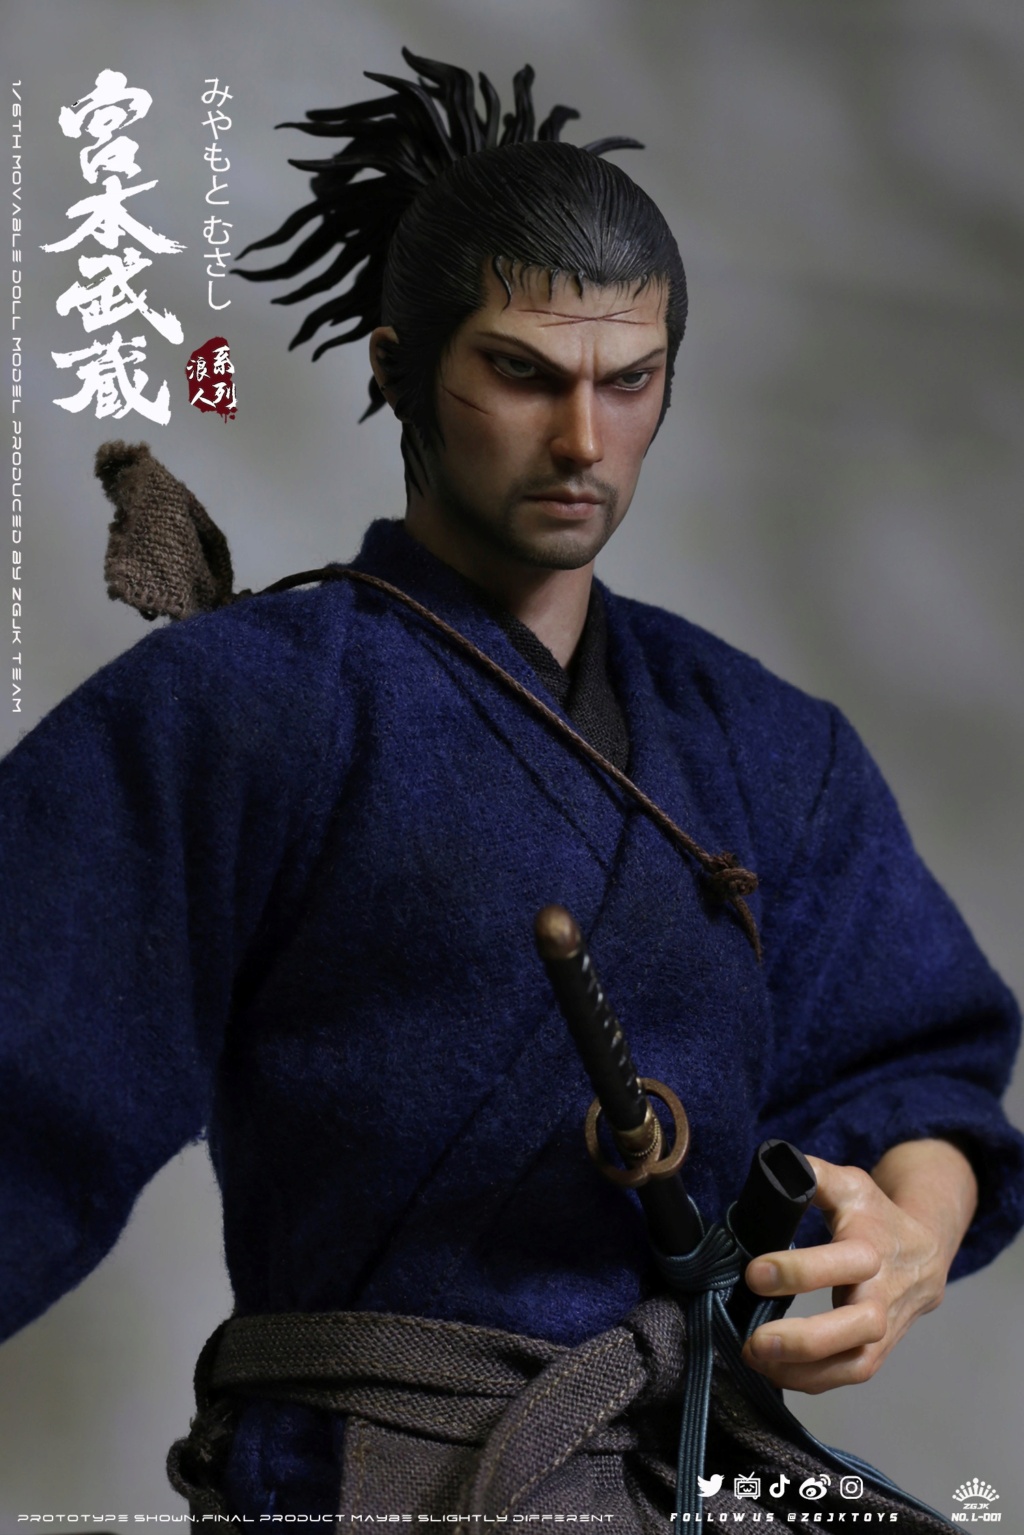 MEW PRODUCT: ZGJKTOYS: Ronin Series 1/6 Miyamoto Musashi Action Figure ------ Updated Official Figure 4b025110